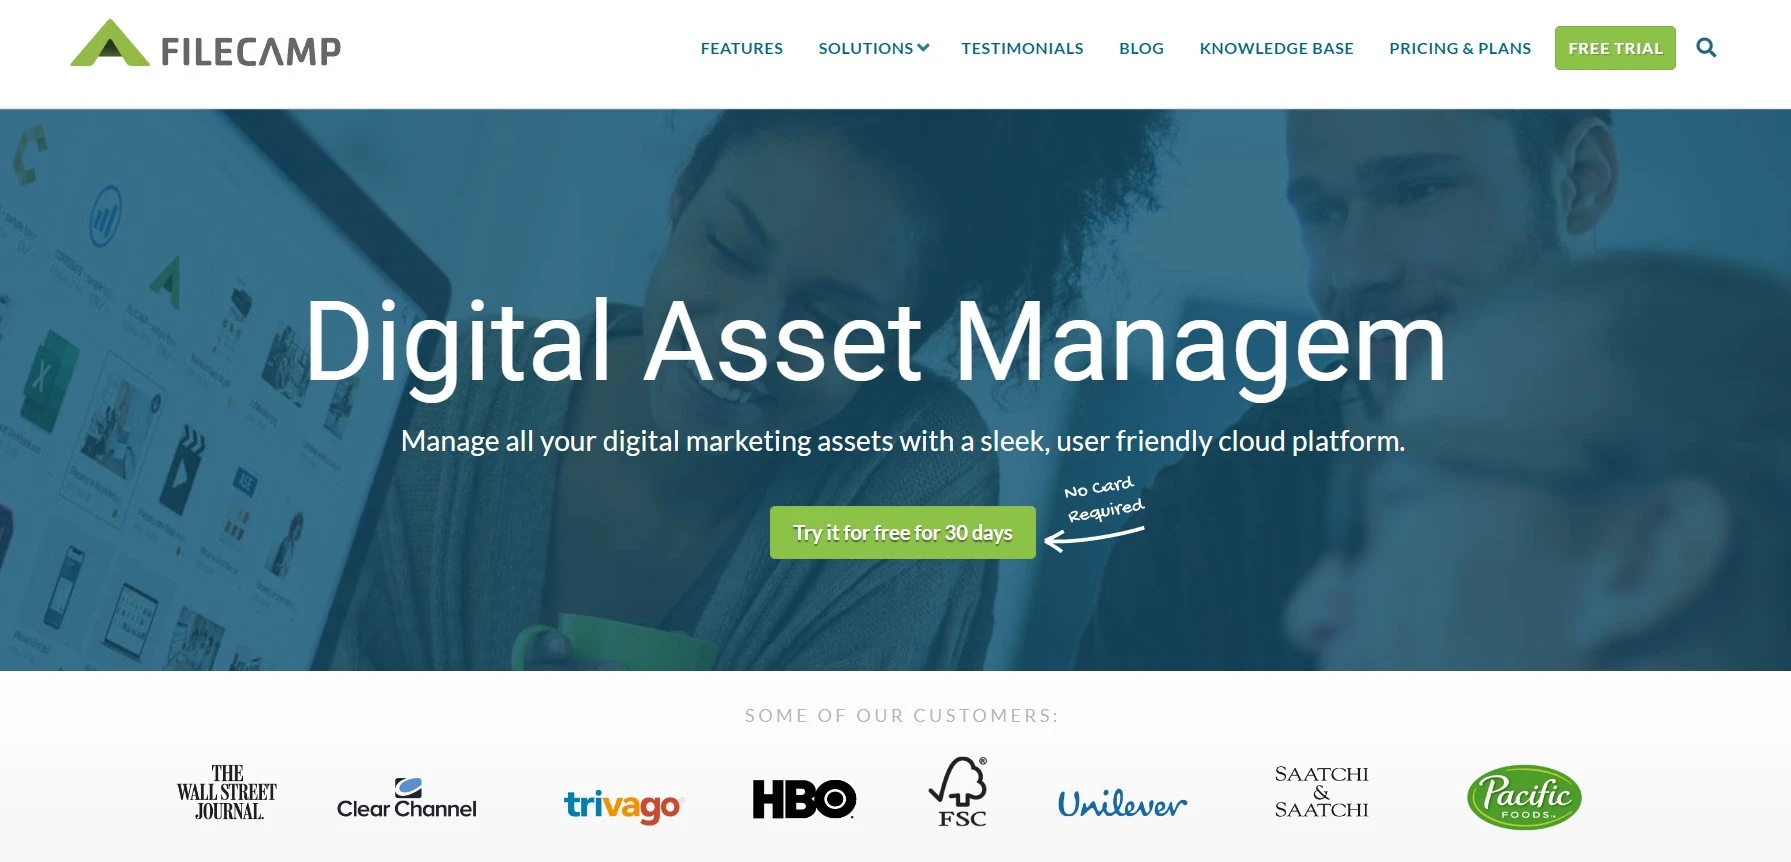 Filecamp digital asset management tool